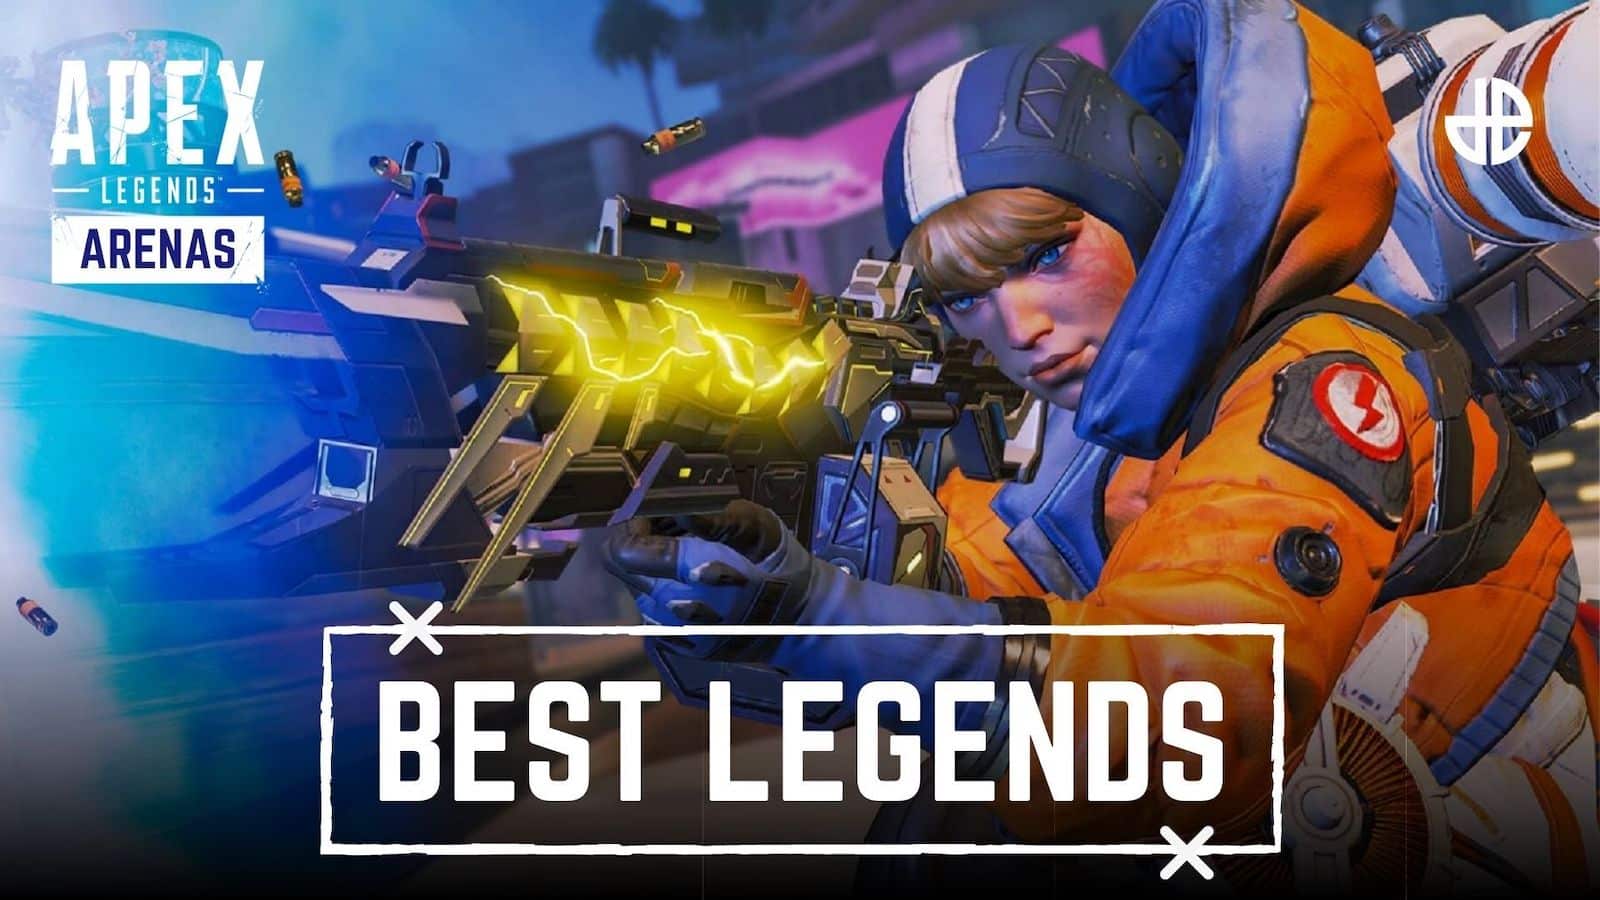 Apex Legends best legends arenas tier list